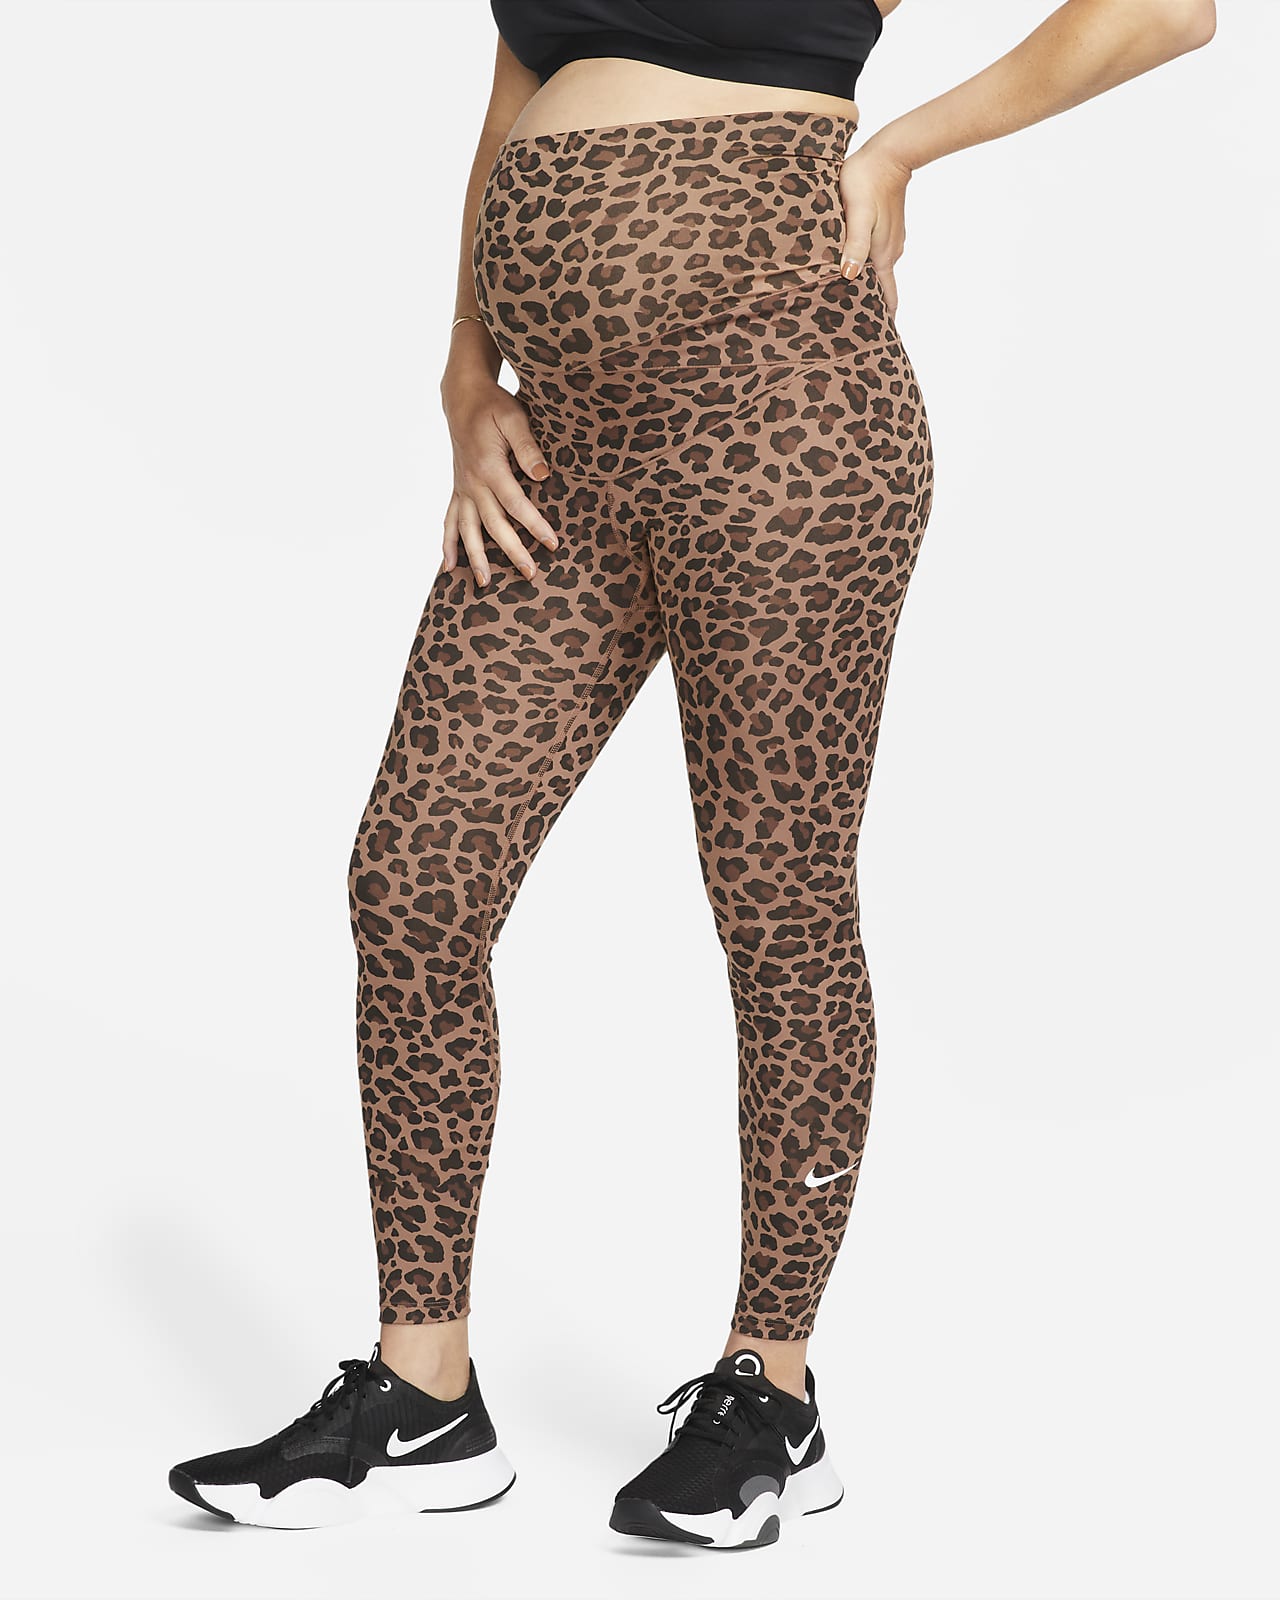 politicus bevel houten Nike One (M) Legging met hoge taille en luipaardprint voor dames  (zwangerschapskleding). Nike NL